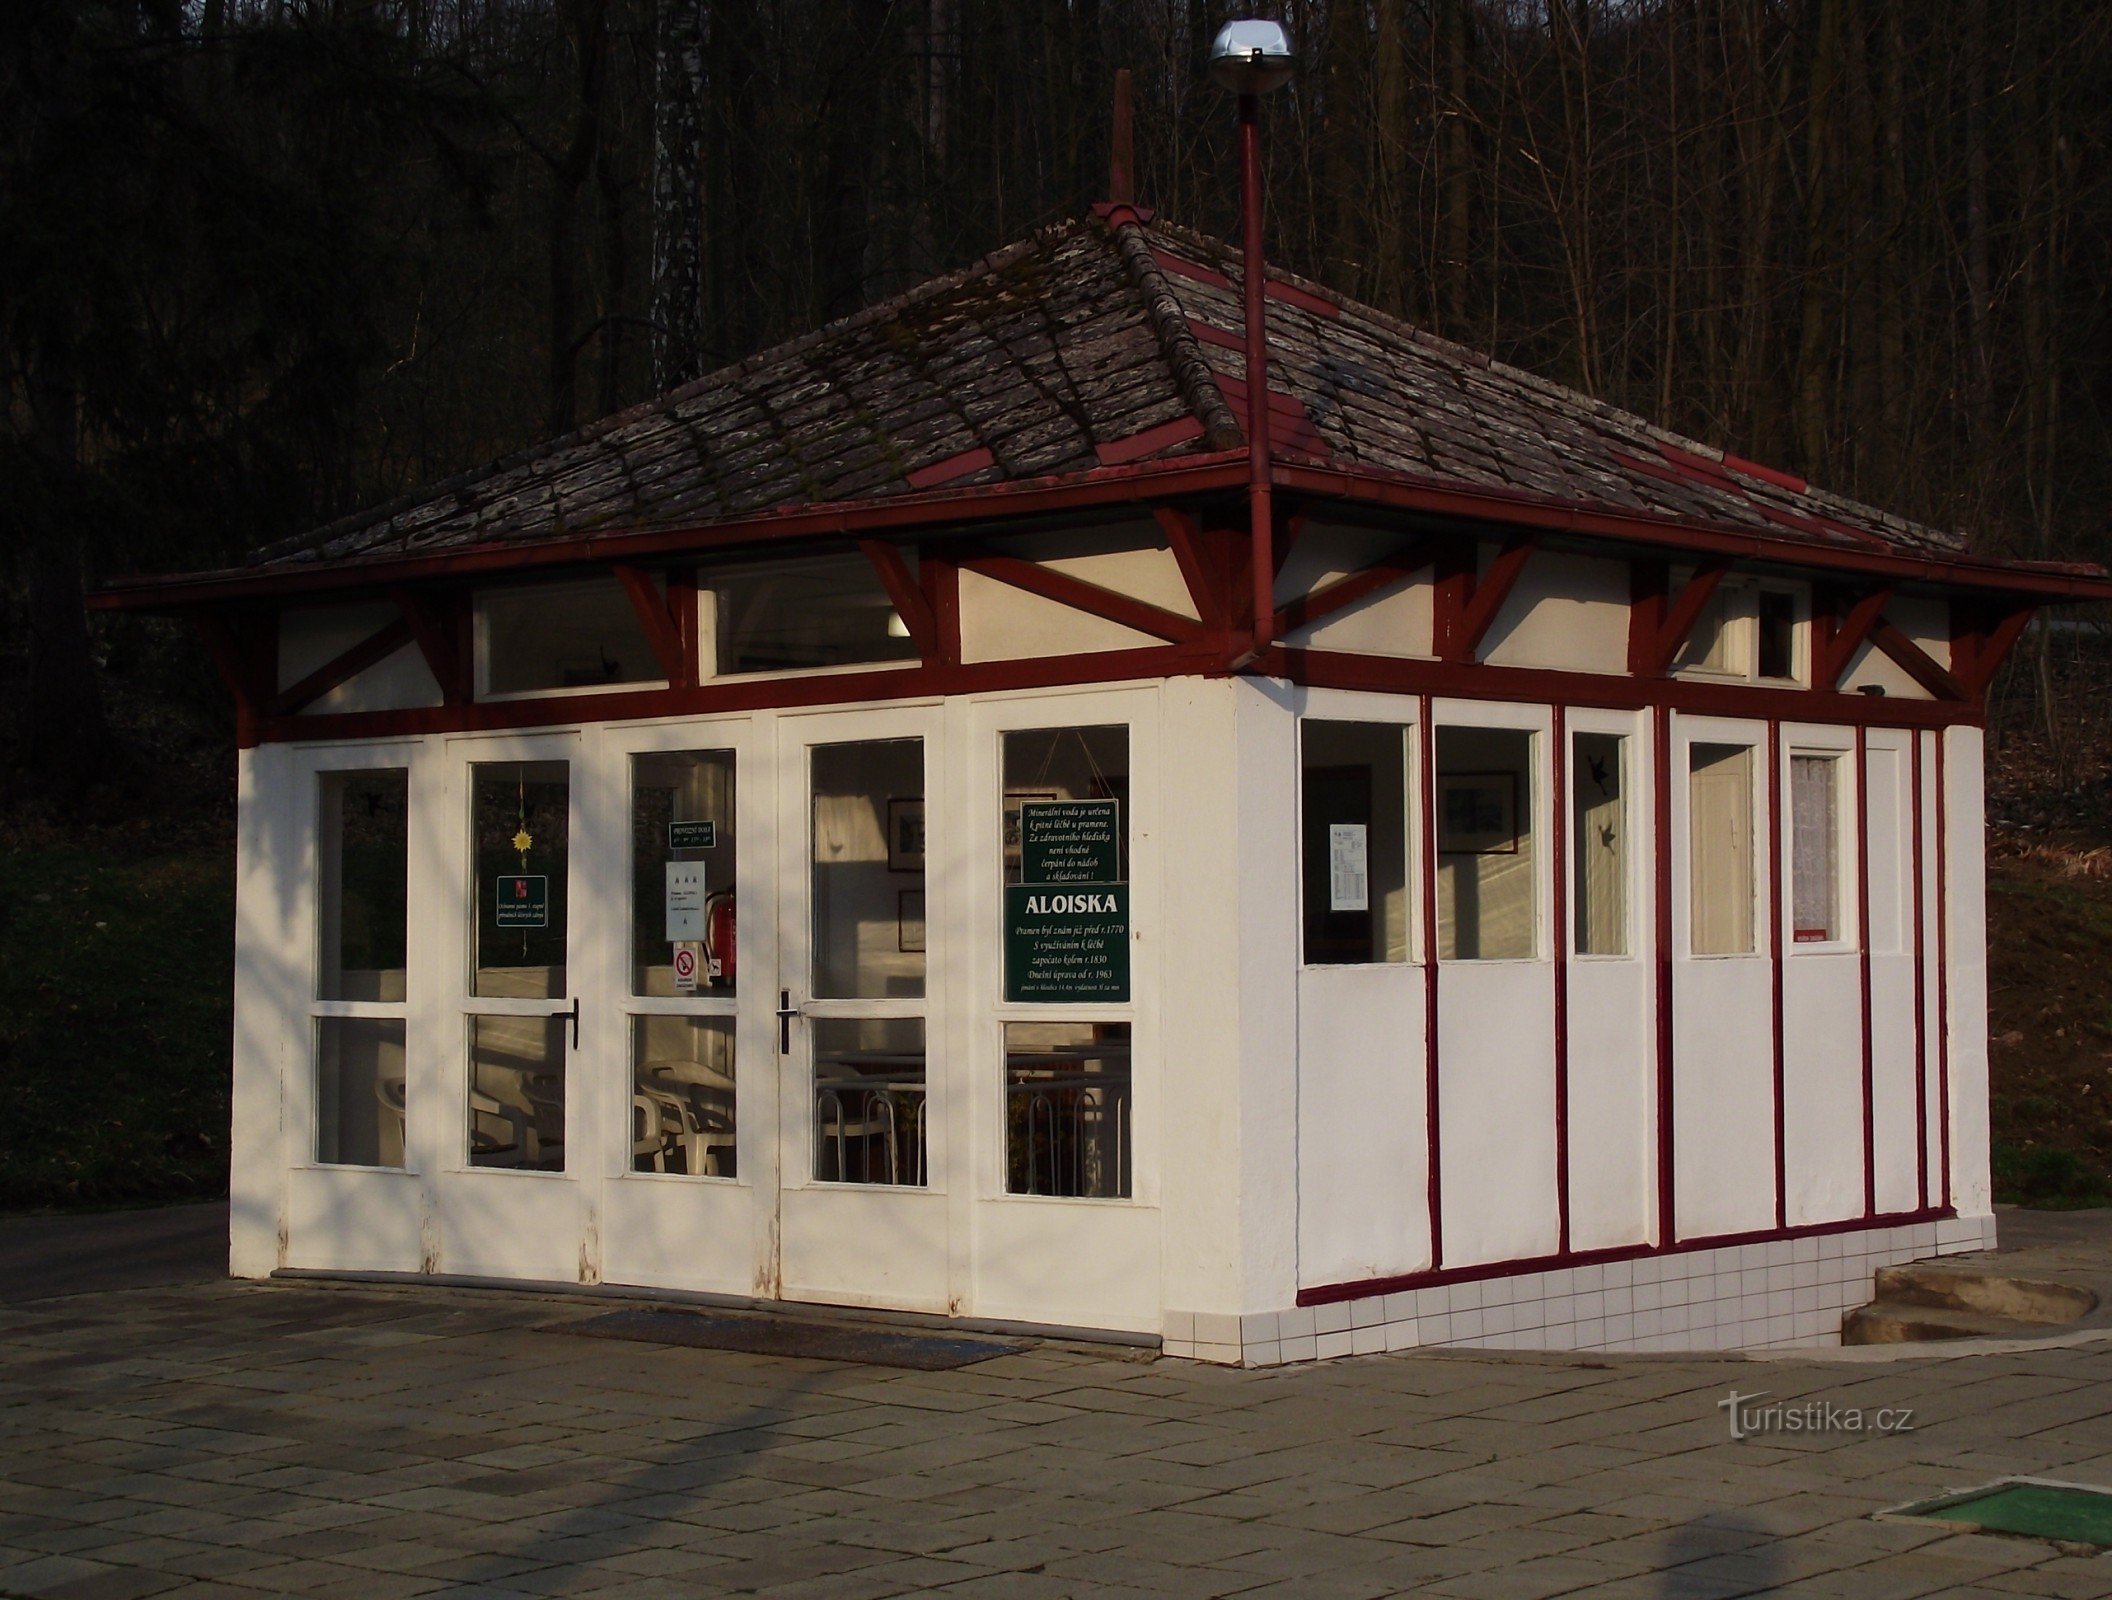 Luhačovice - Aloiska Spring and Pavilion (Forest Spring)